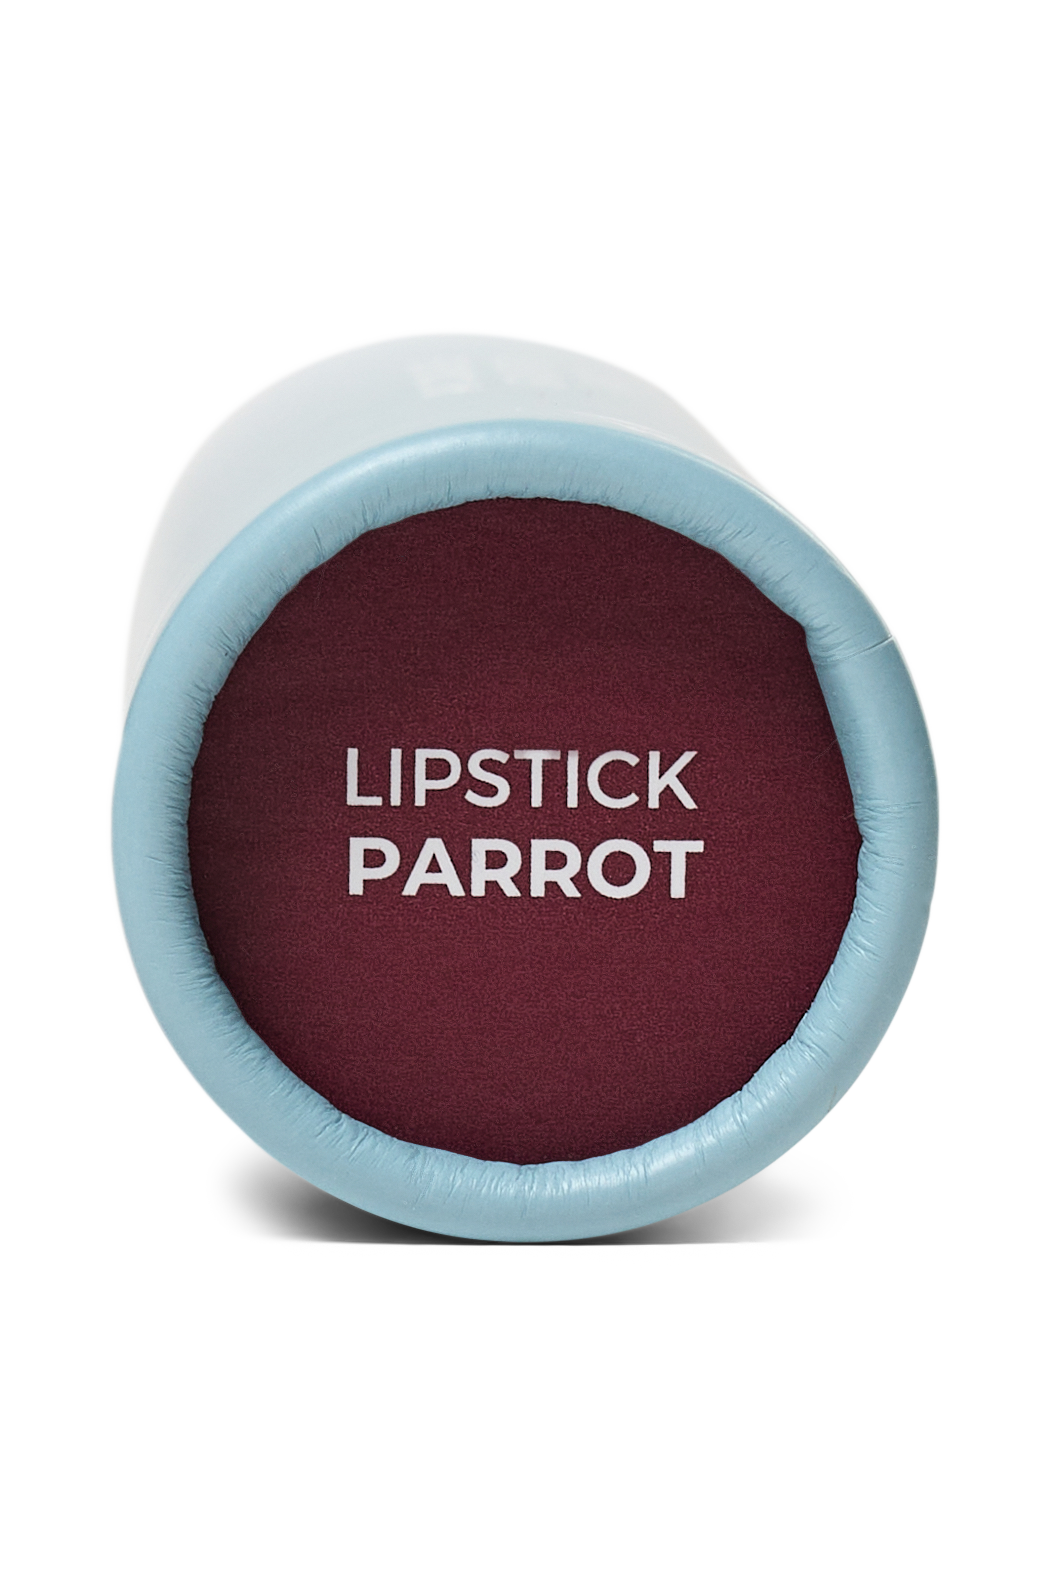 Coral reef vegan lipstick - Parrot